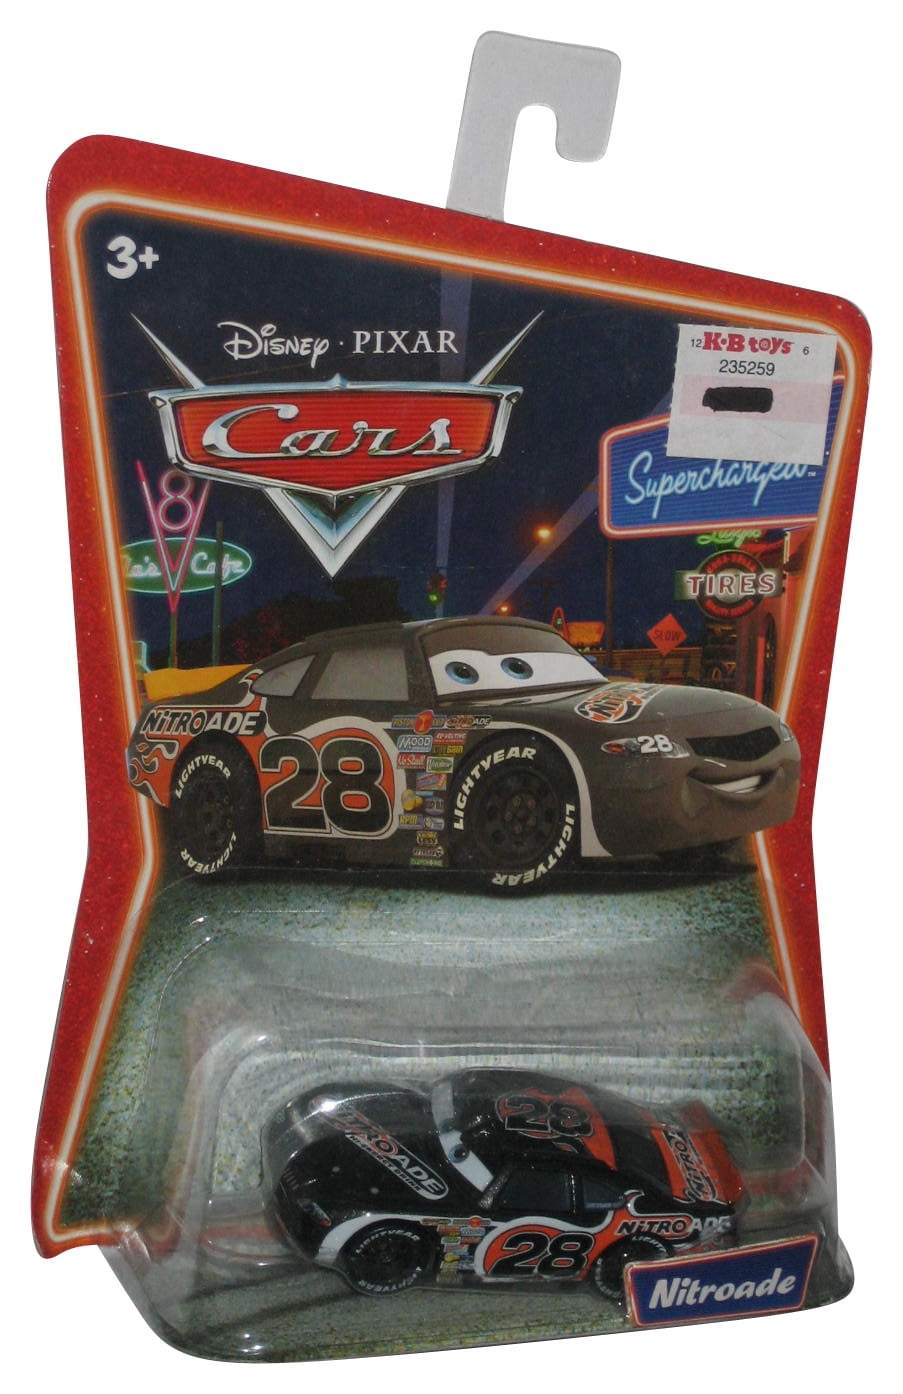 Disney Pixar Cars Nitroade Supercharged Die-Cast Mattel Toy Car 